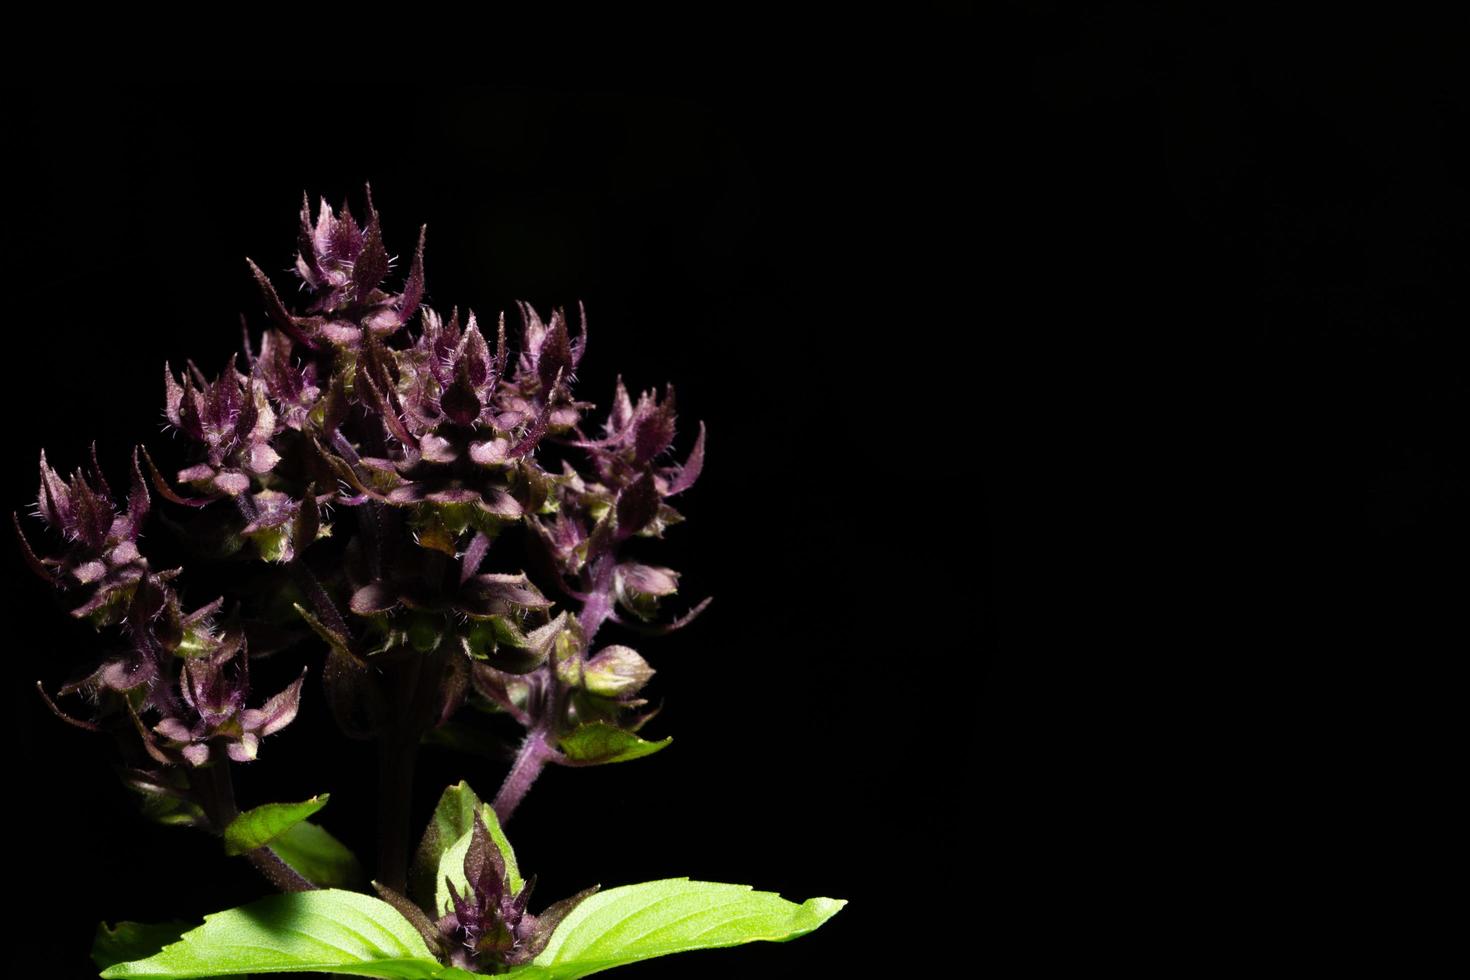 Basil flower on black background photo